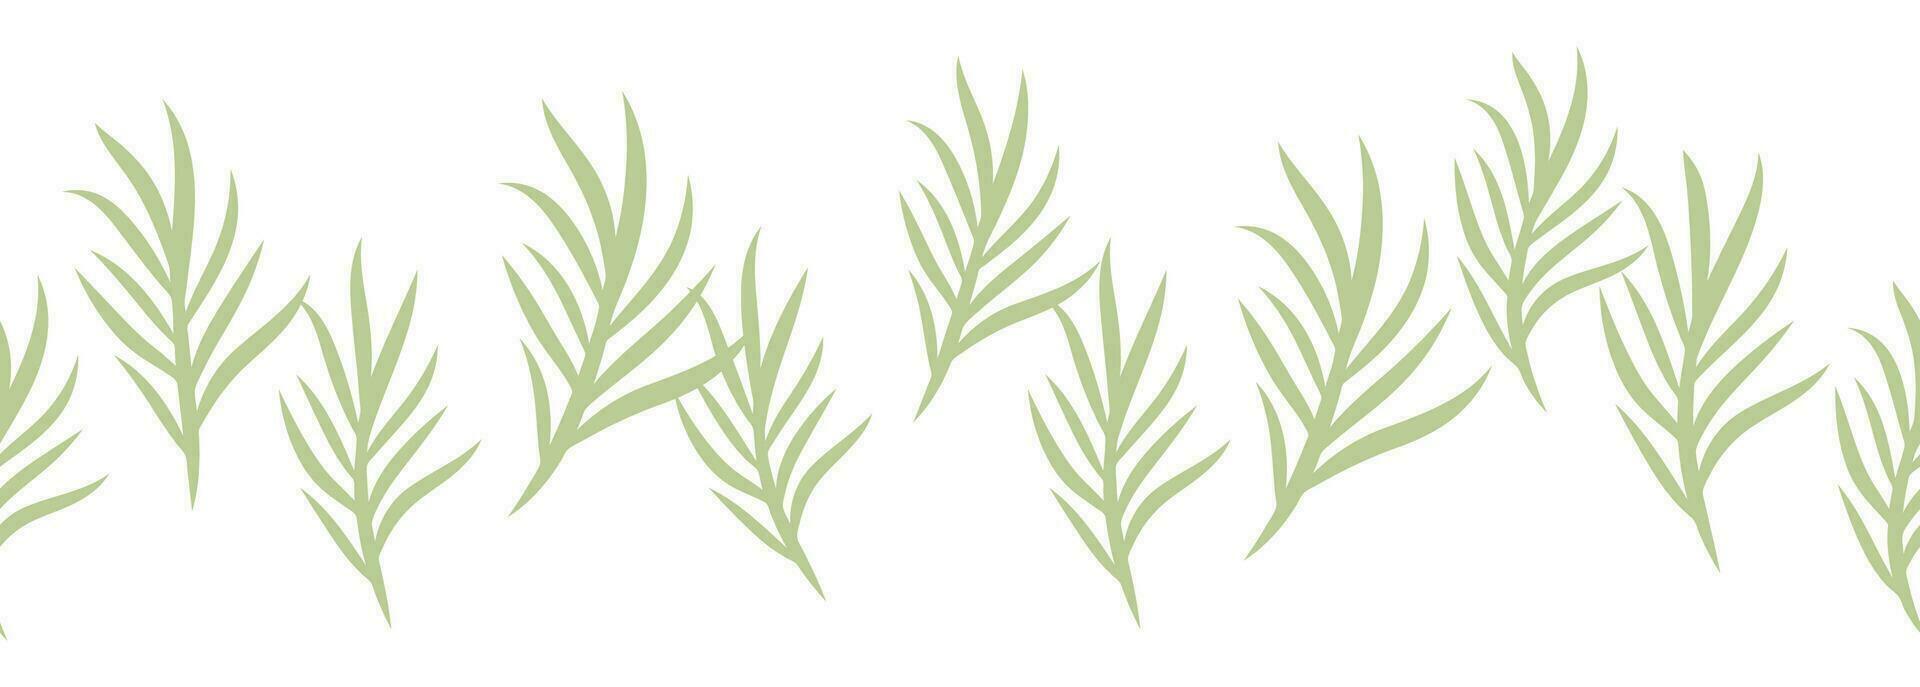 Leaves decorative, algae horizontal border seamless pattern vector